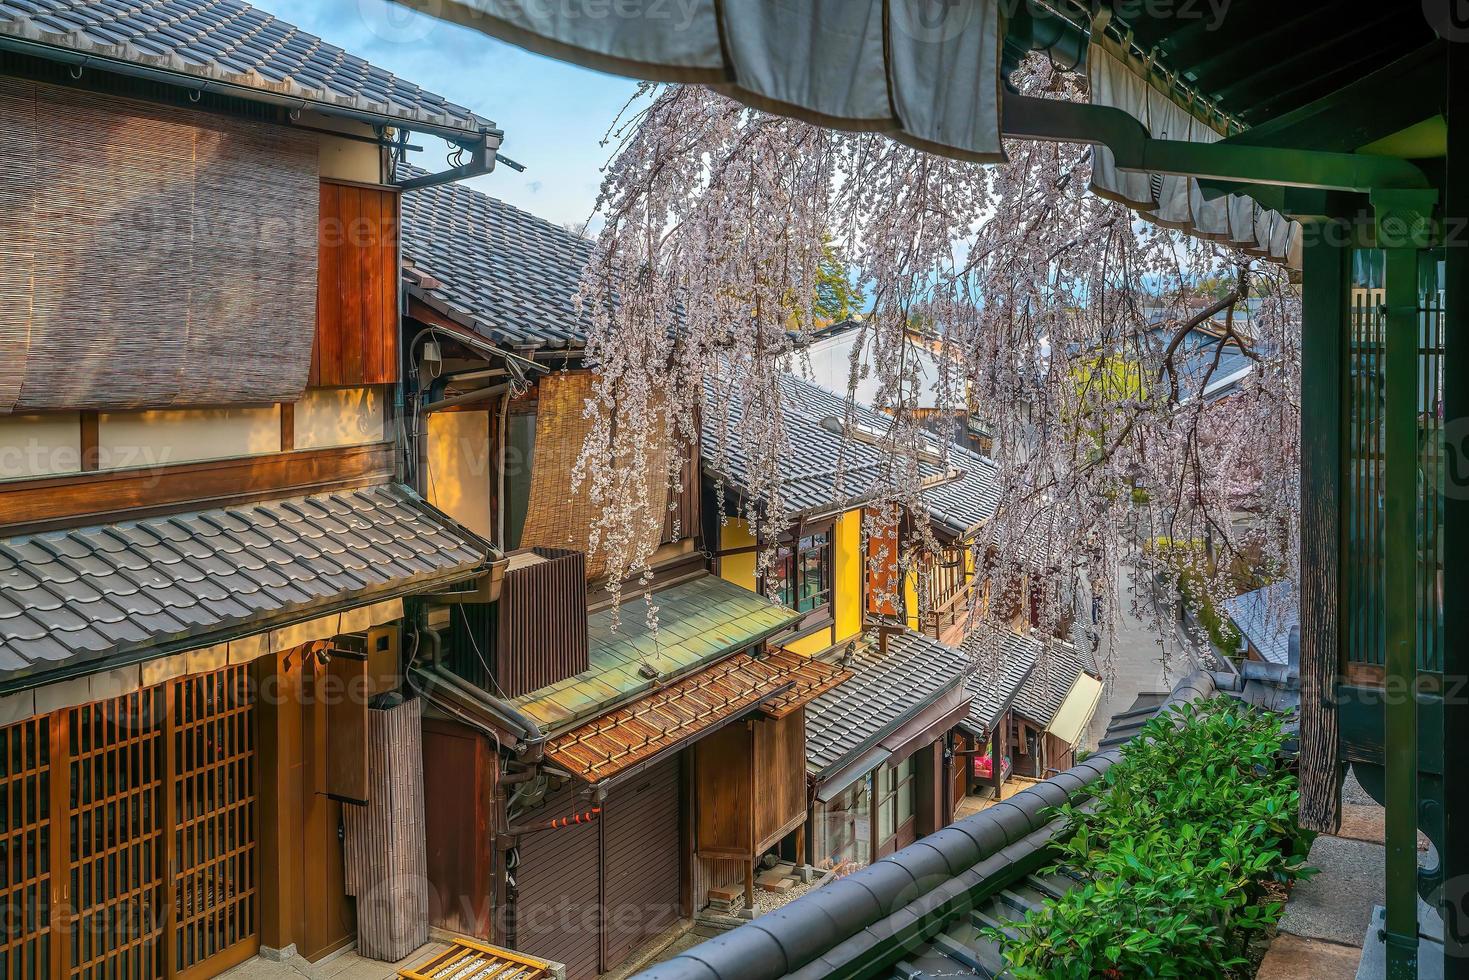 de historisch higashiyama wijk in kyoto, Japan lente foto